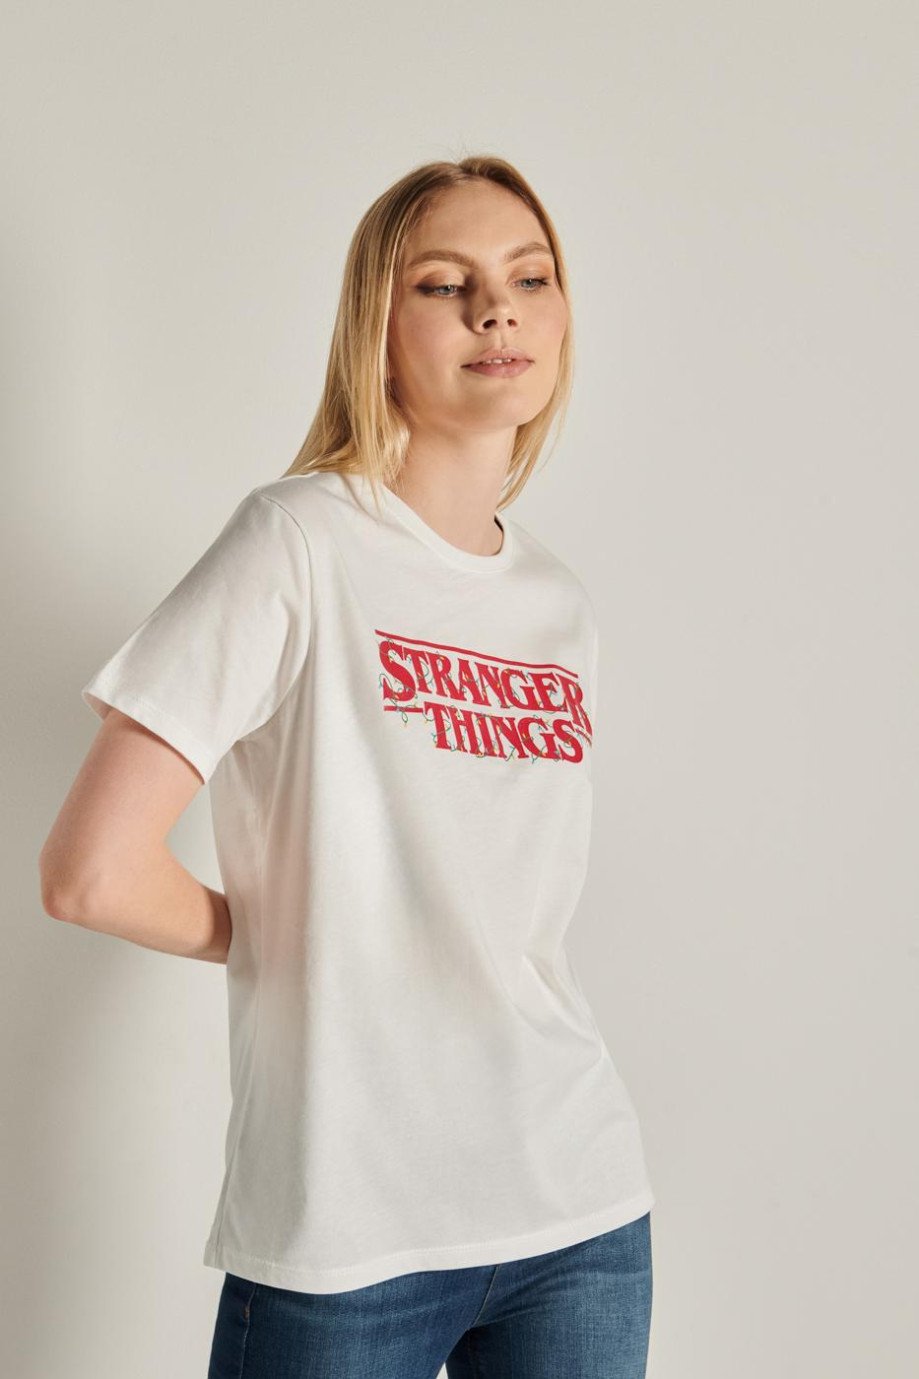 Camiseta crop top de Stranger Things